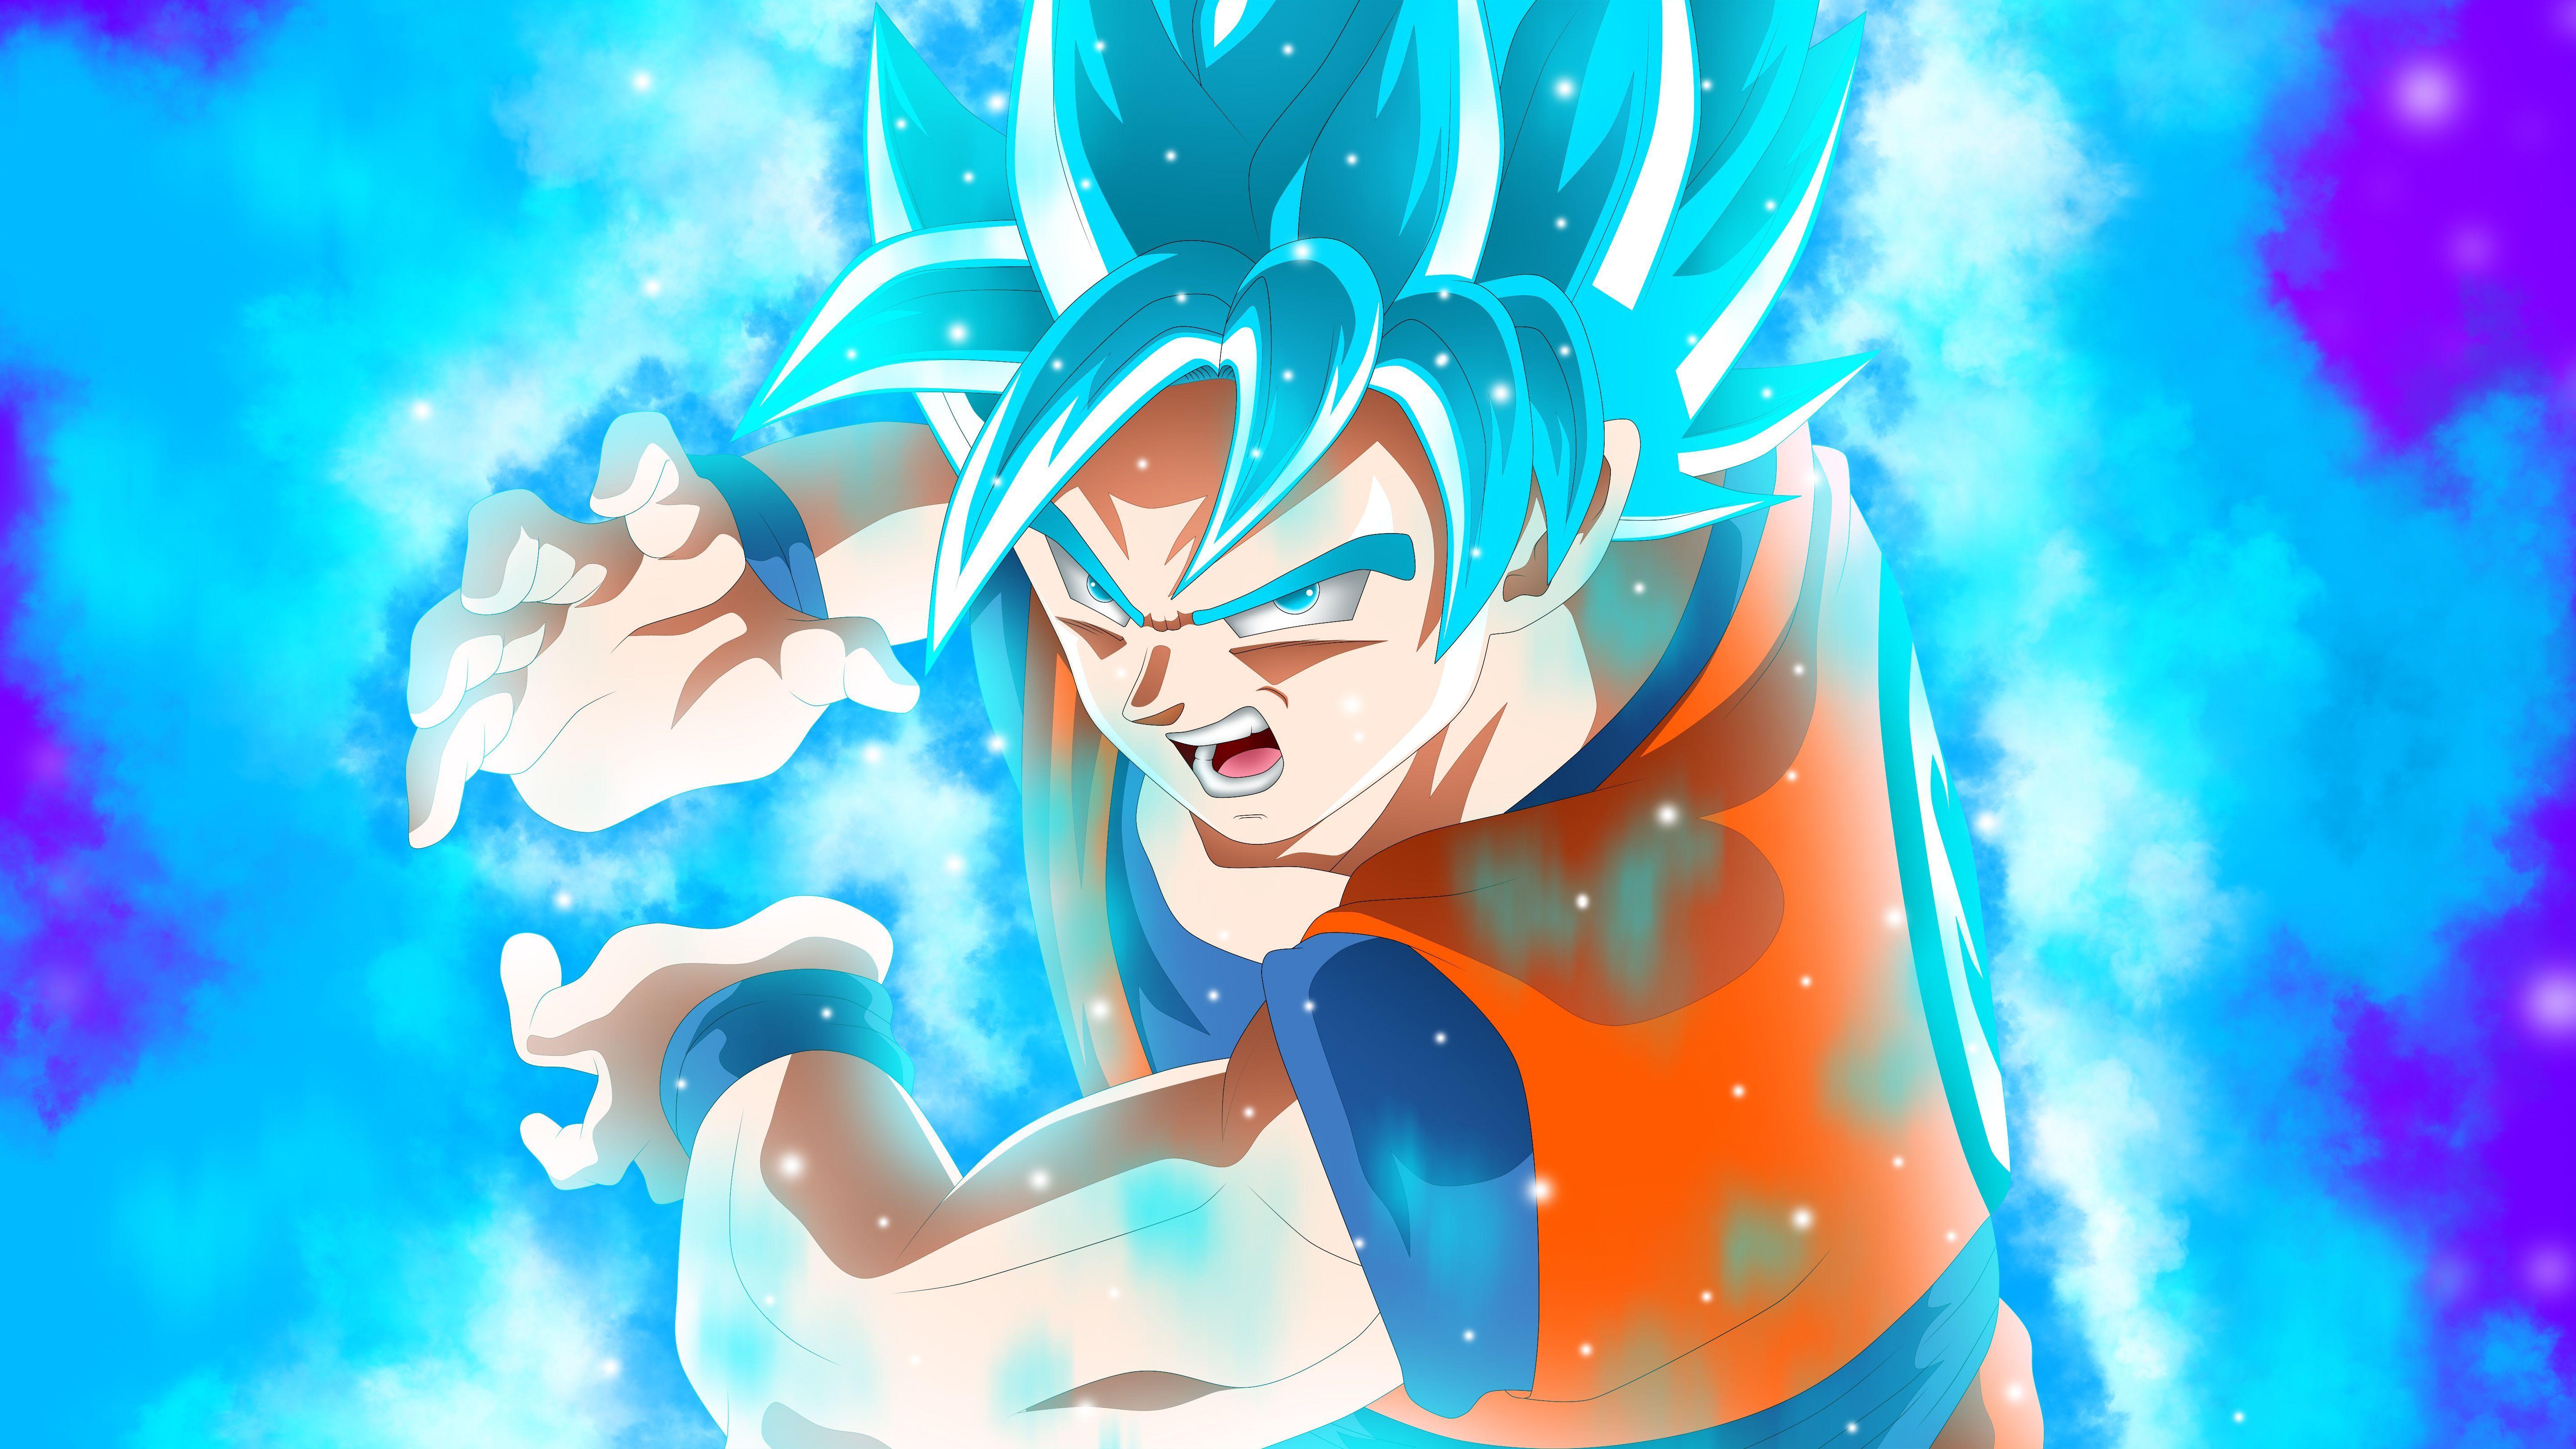 Goku Super Saiyan Blue Wallpaper by TeamSaiyanHD on DeviantArt